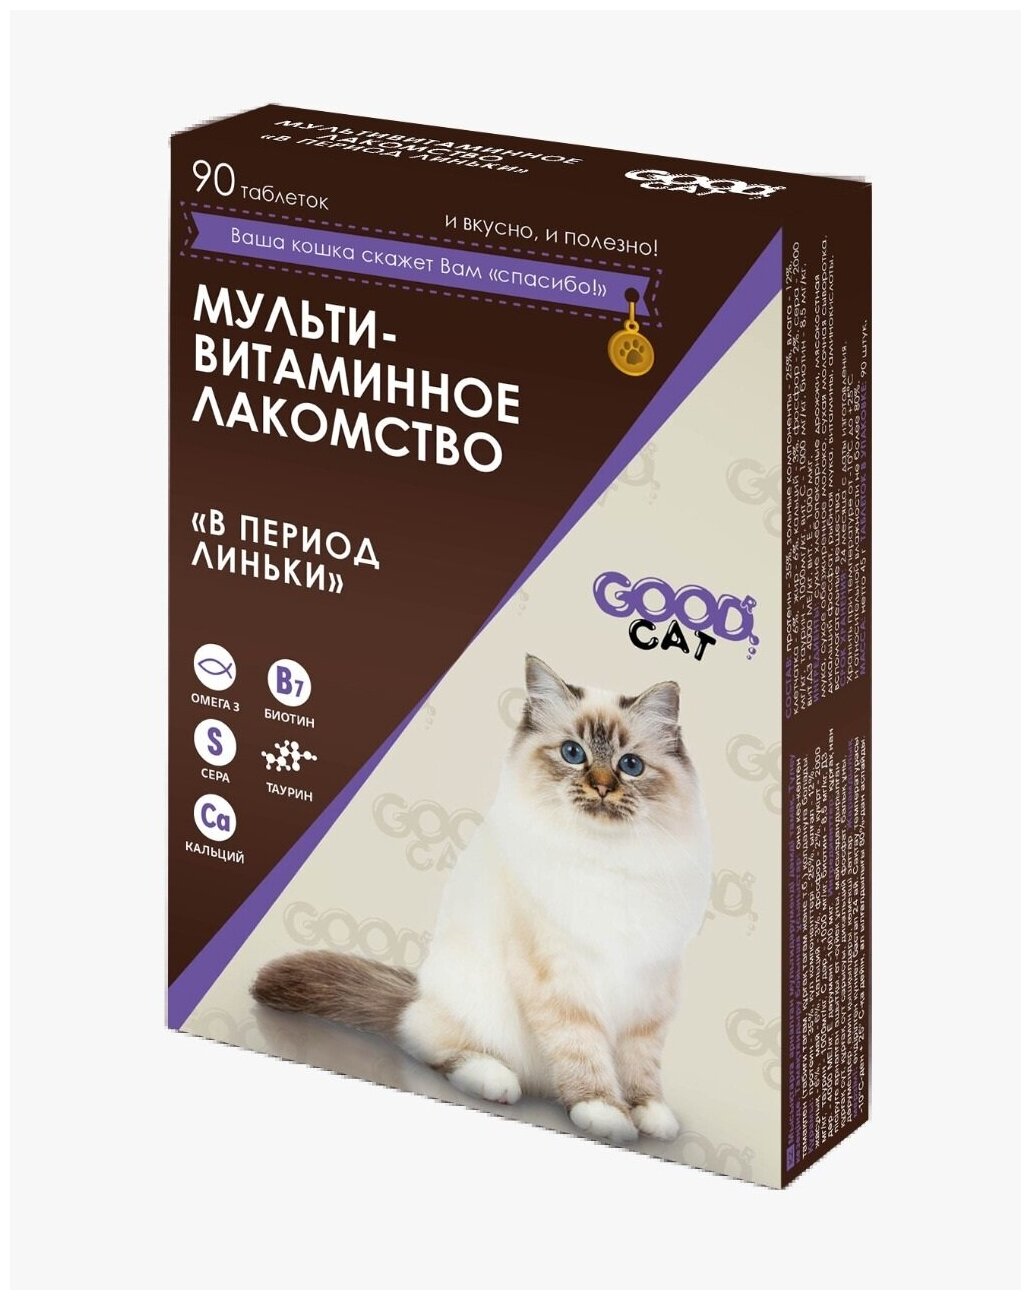 GOOD CAT Мультивитаминное лакомcтво для Кошек "В период линьки" 90 таб